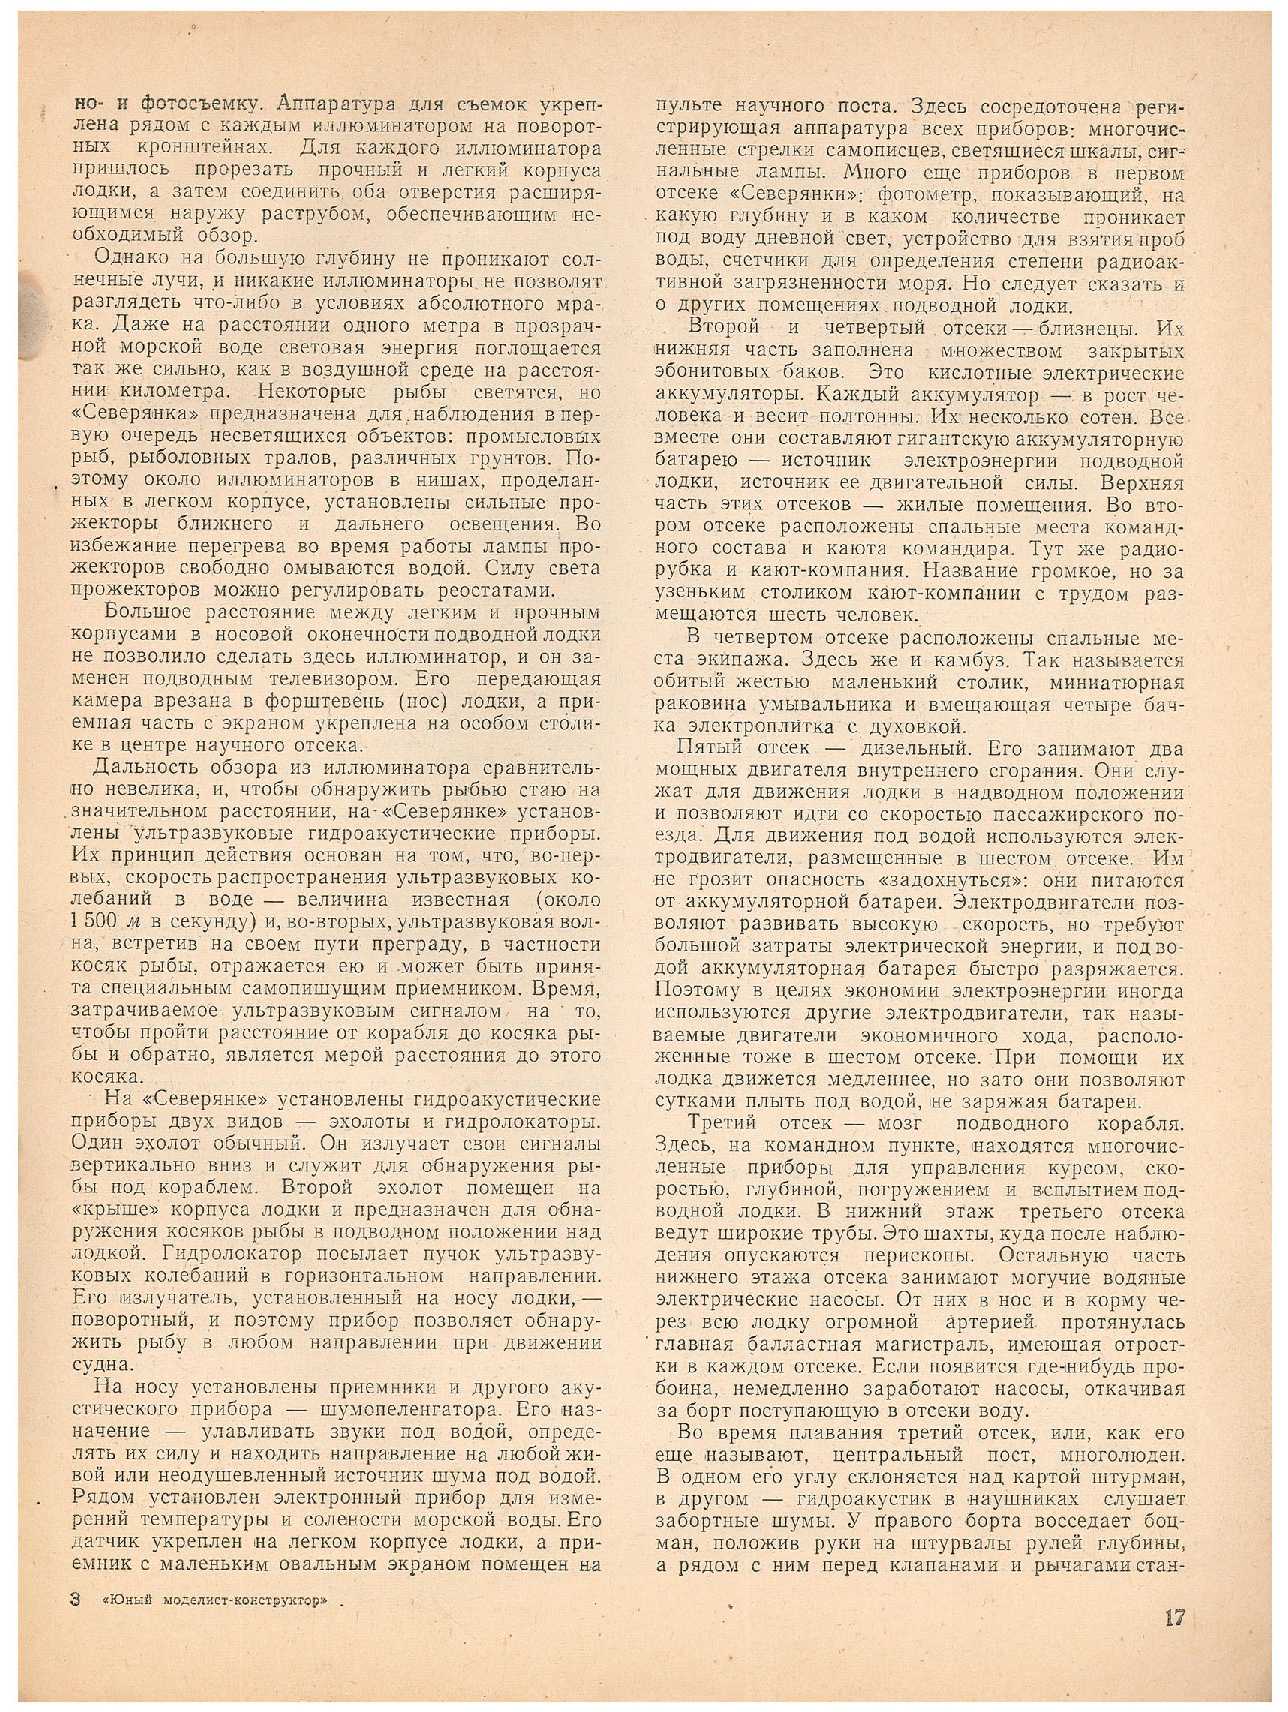 ЮМК 2, 1962, 17 c.